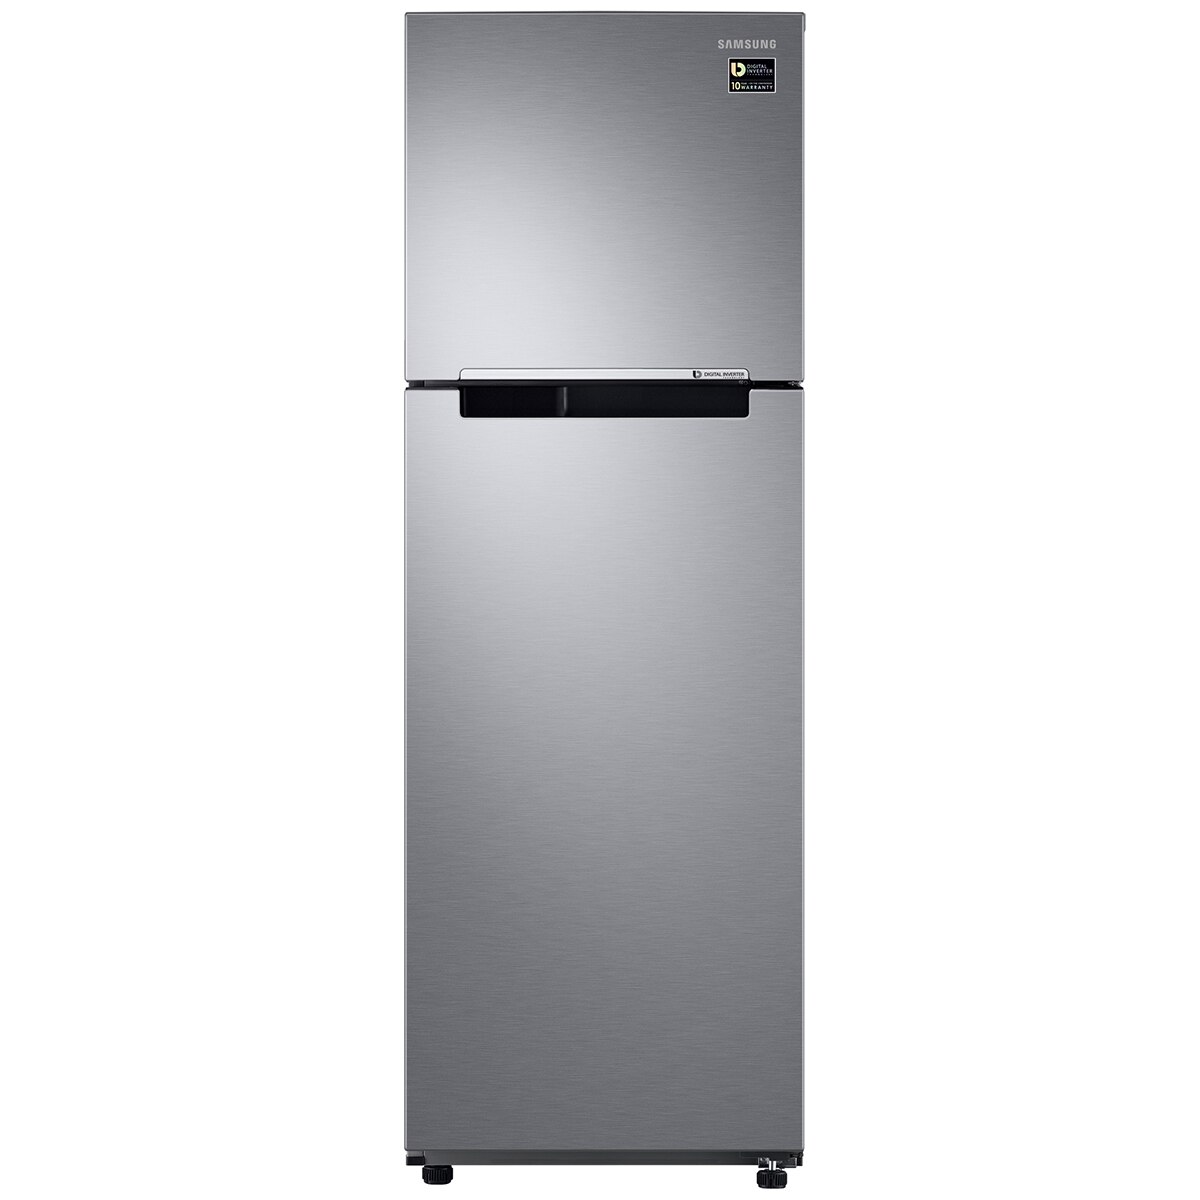 SAMSUNG - Top mount fridge